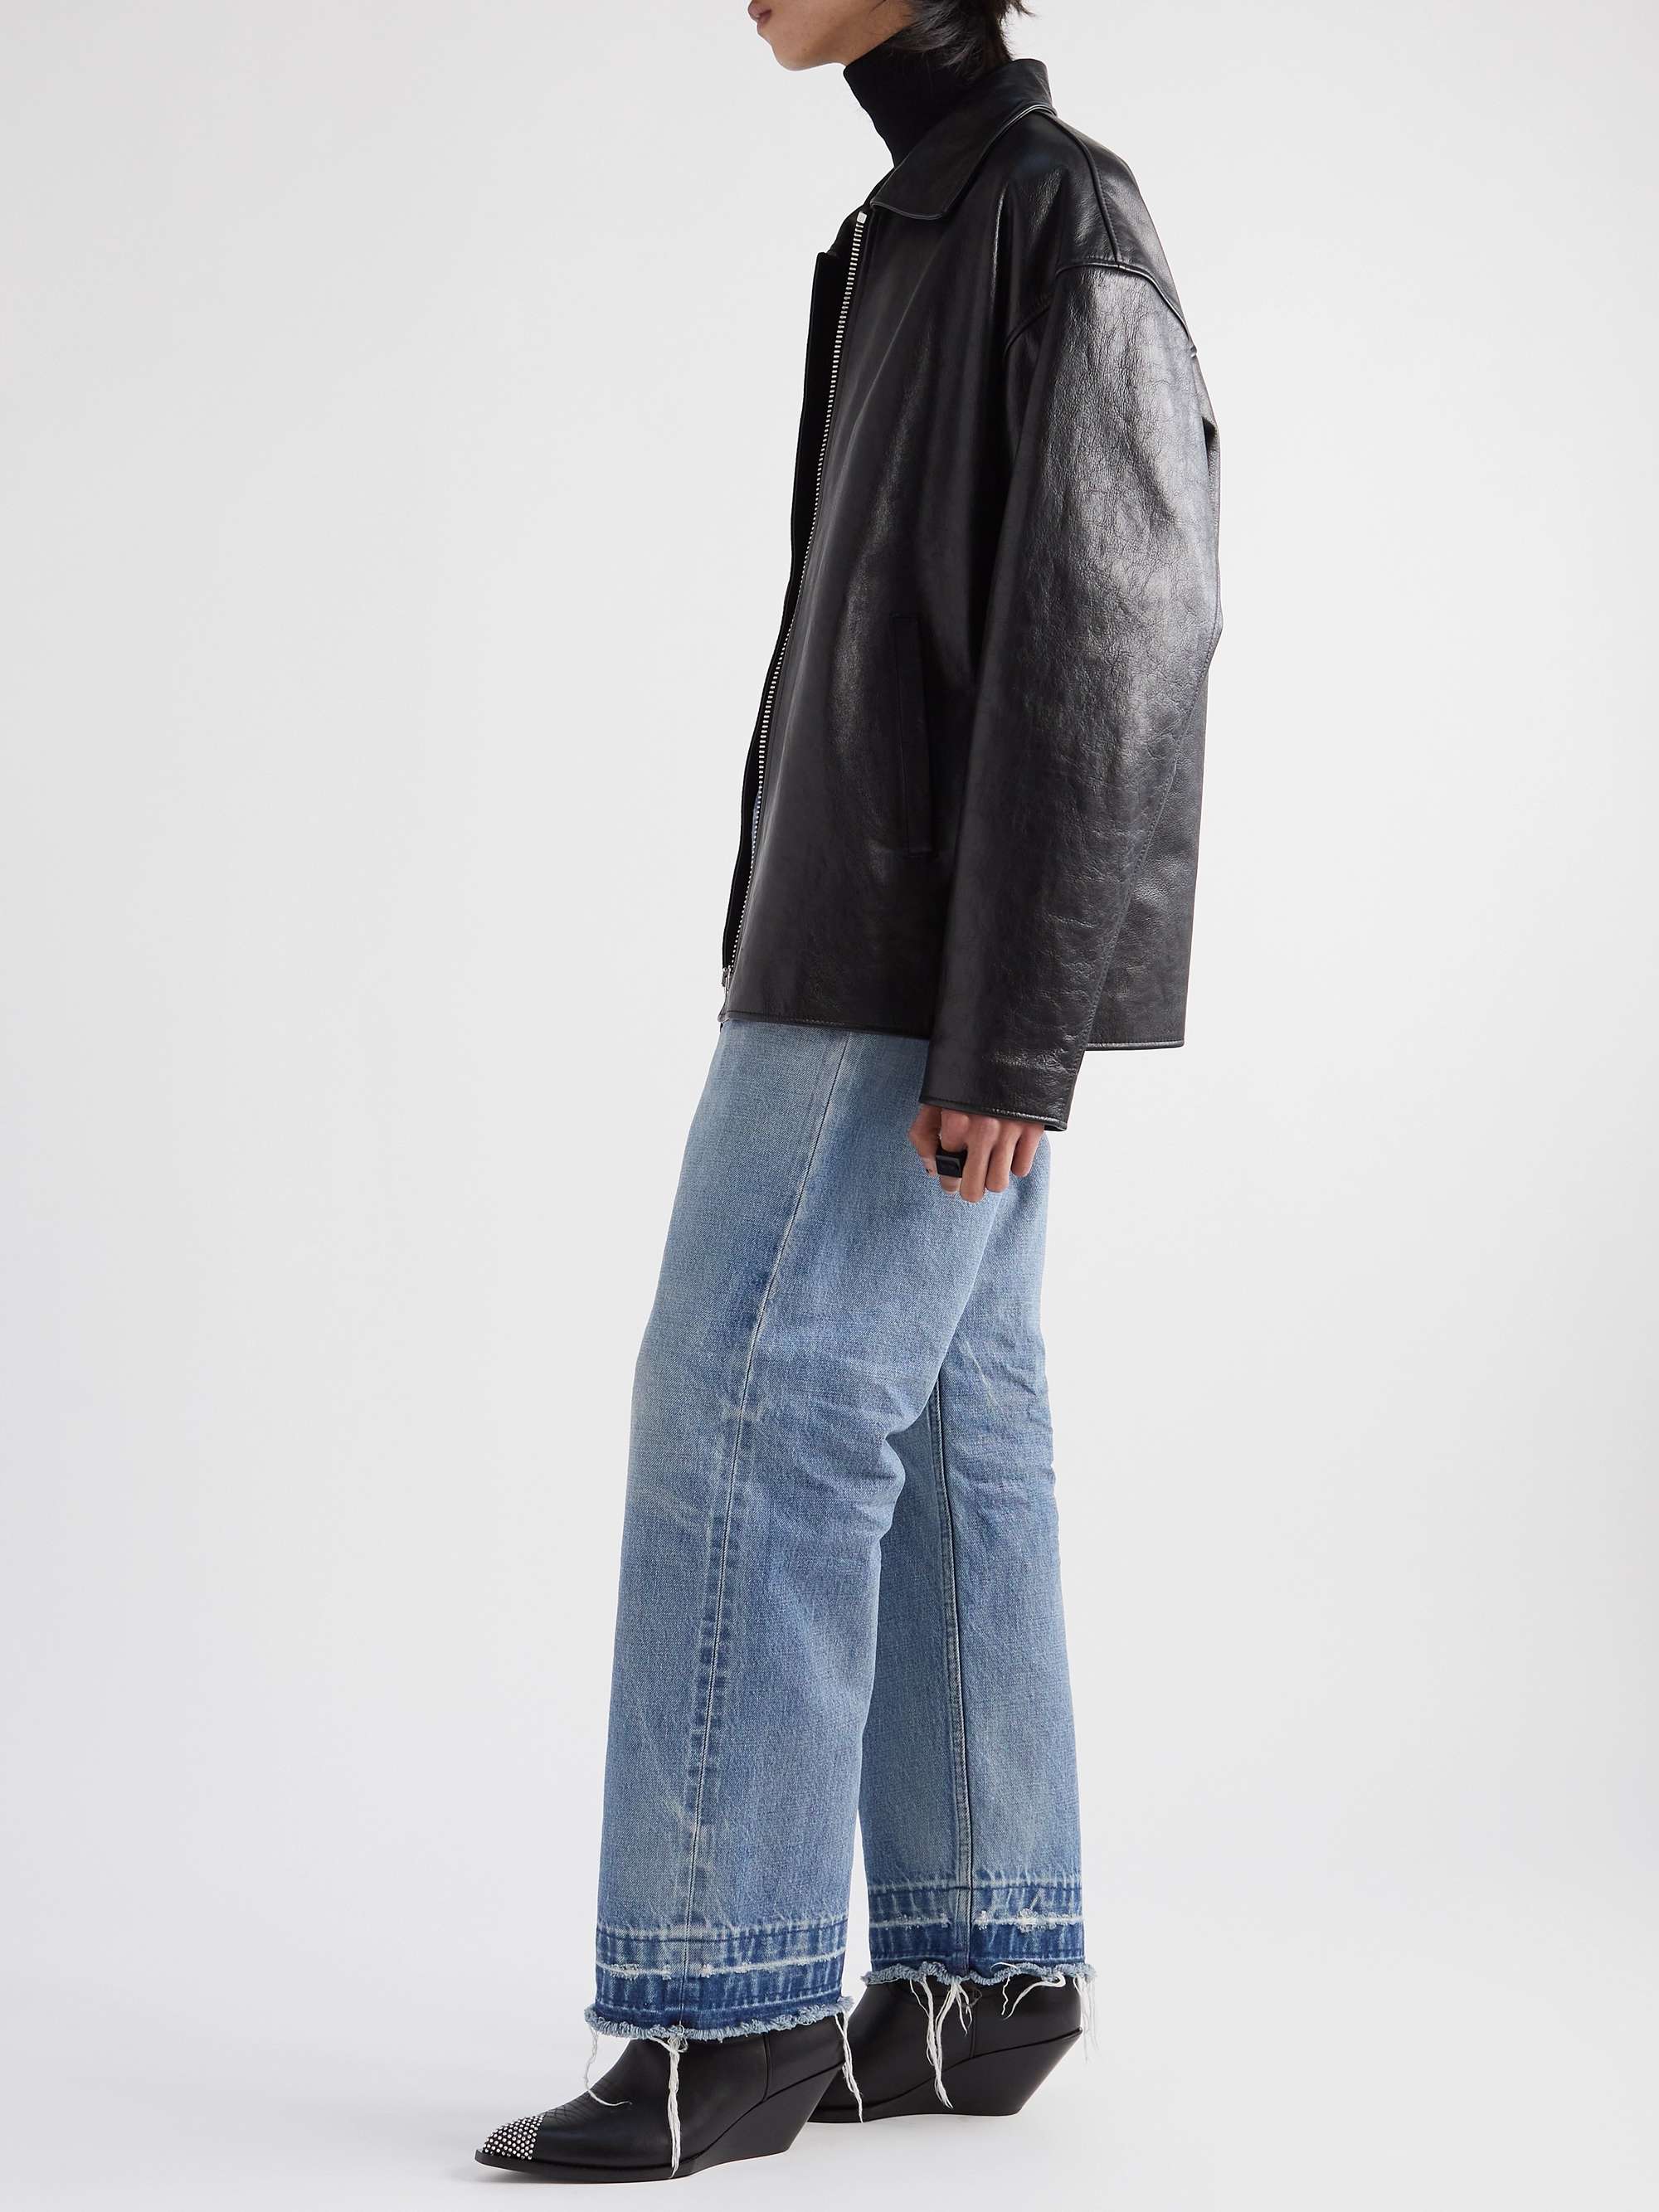 CELINE HOMME Wesley Straight-Leg Distressed Jeans